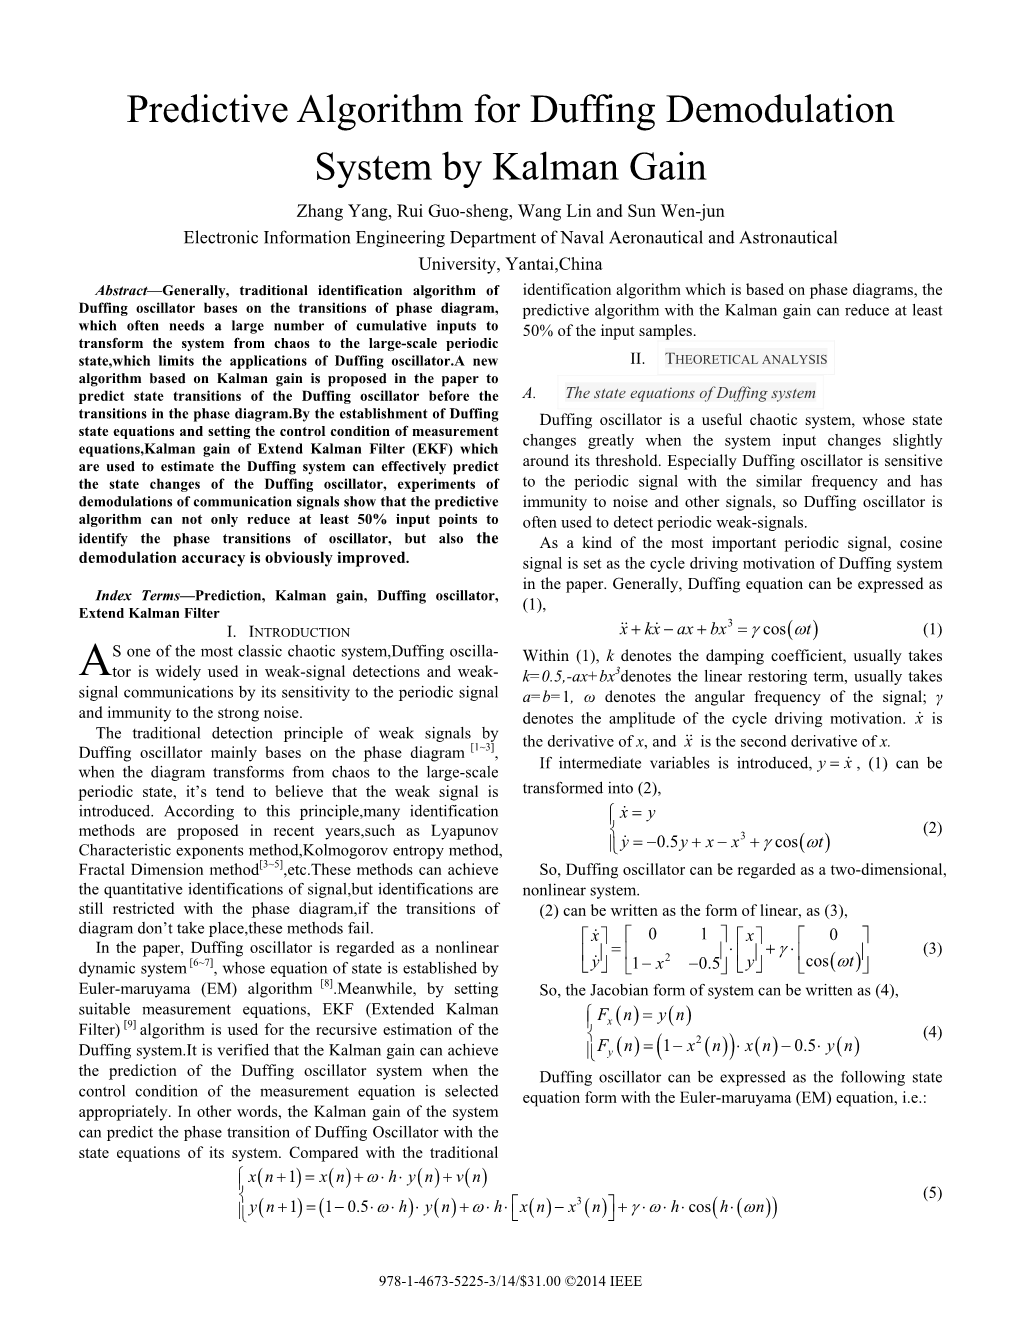 Predictive Algorithm for Duffing Demodulation System by Kalman